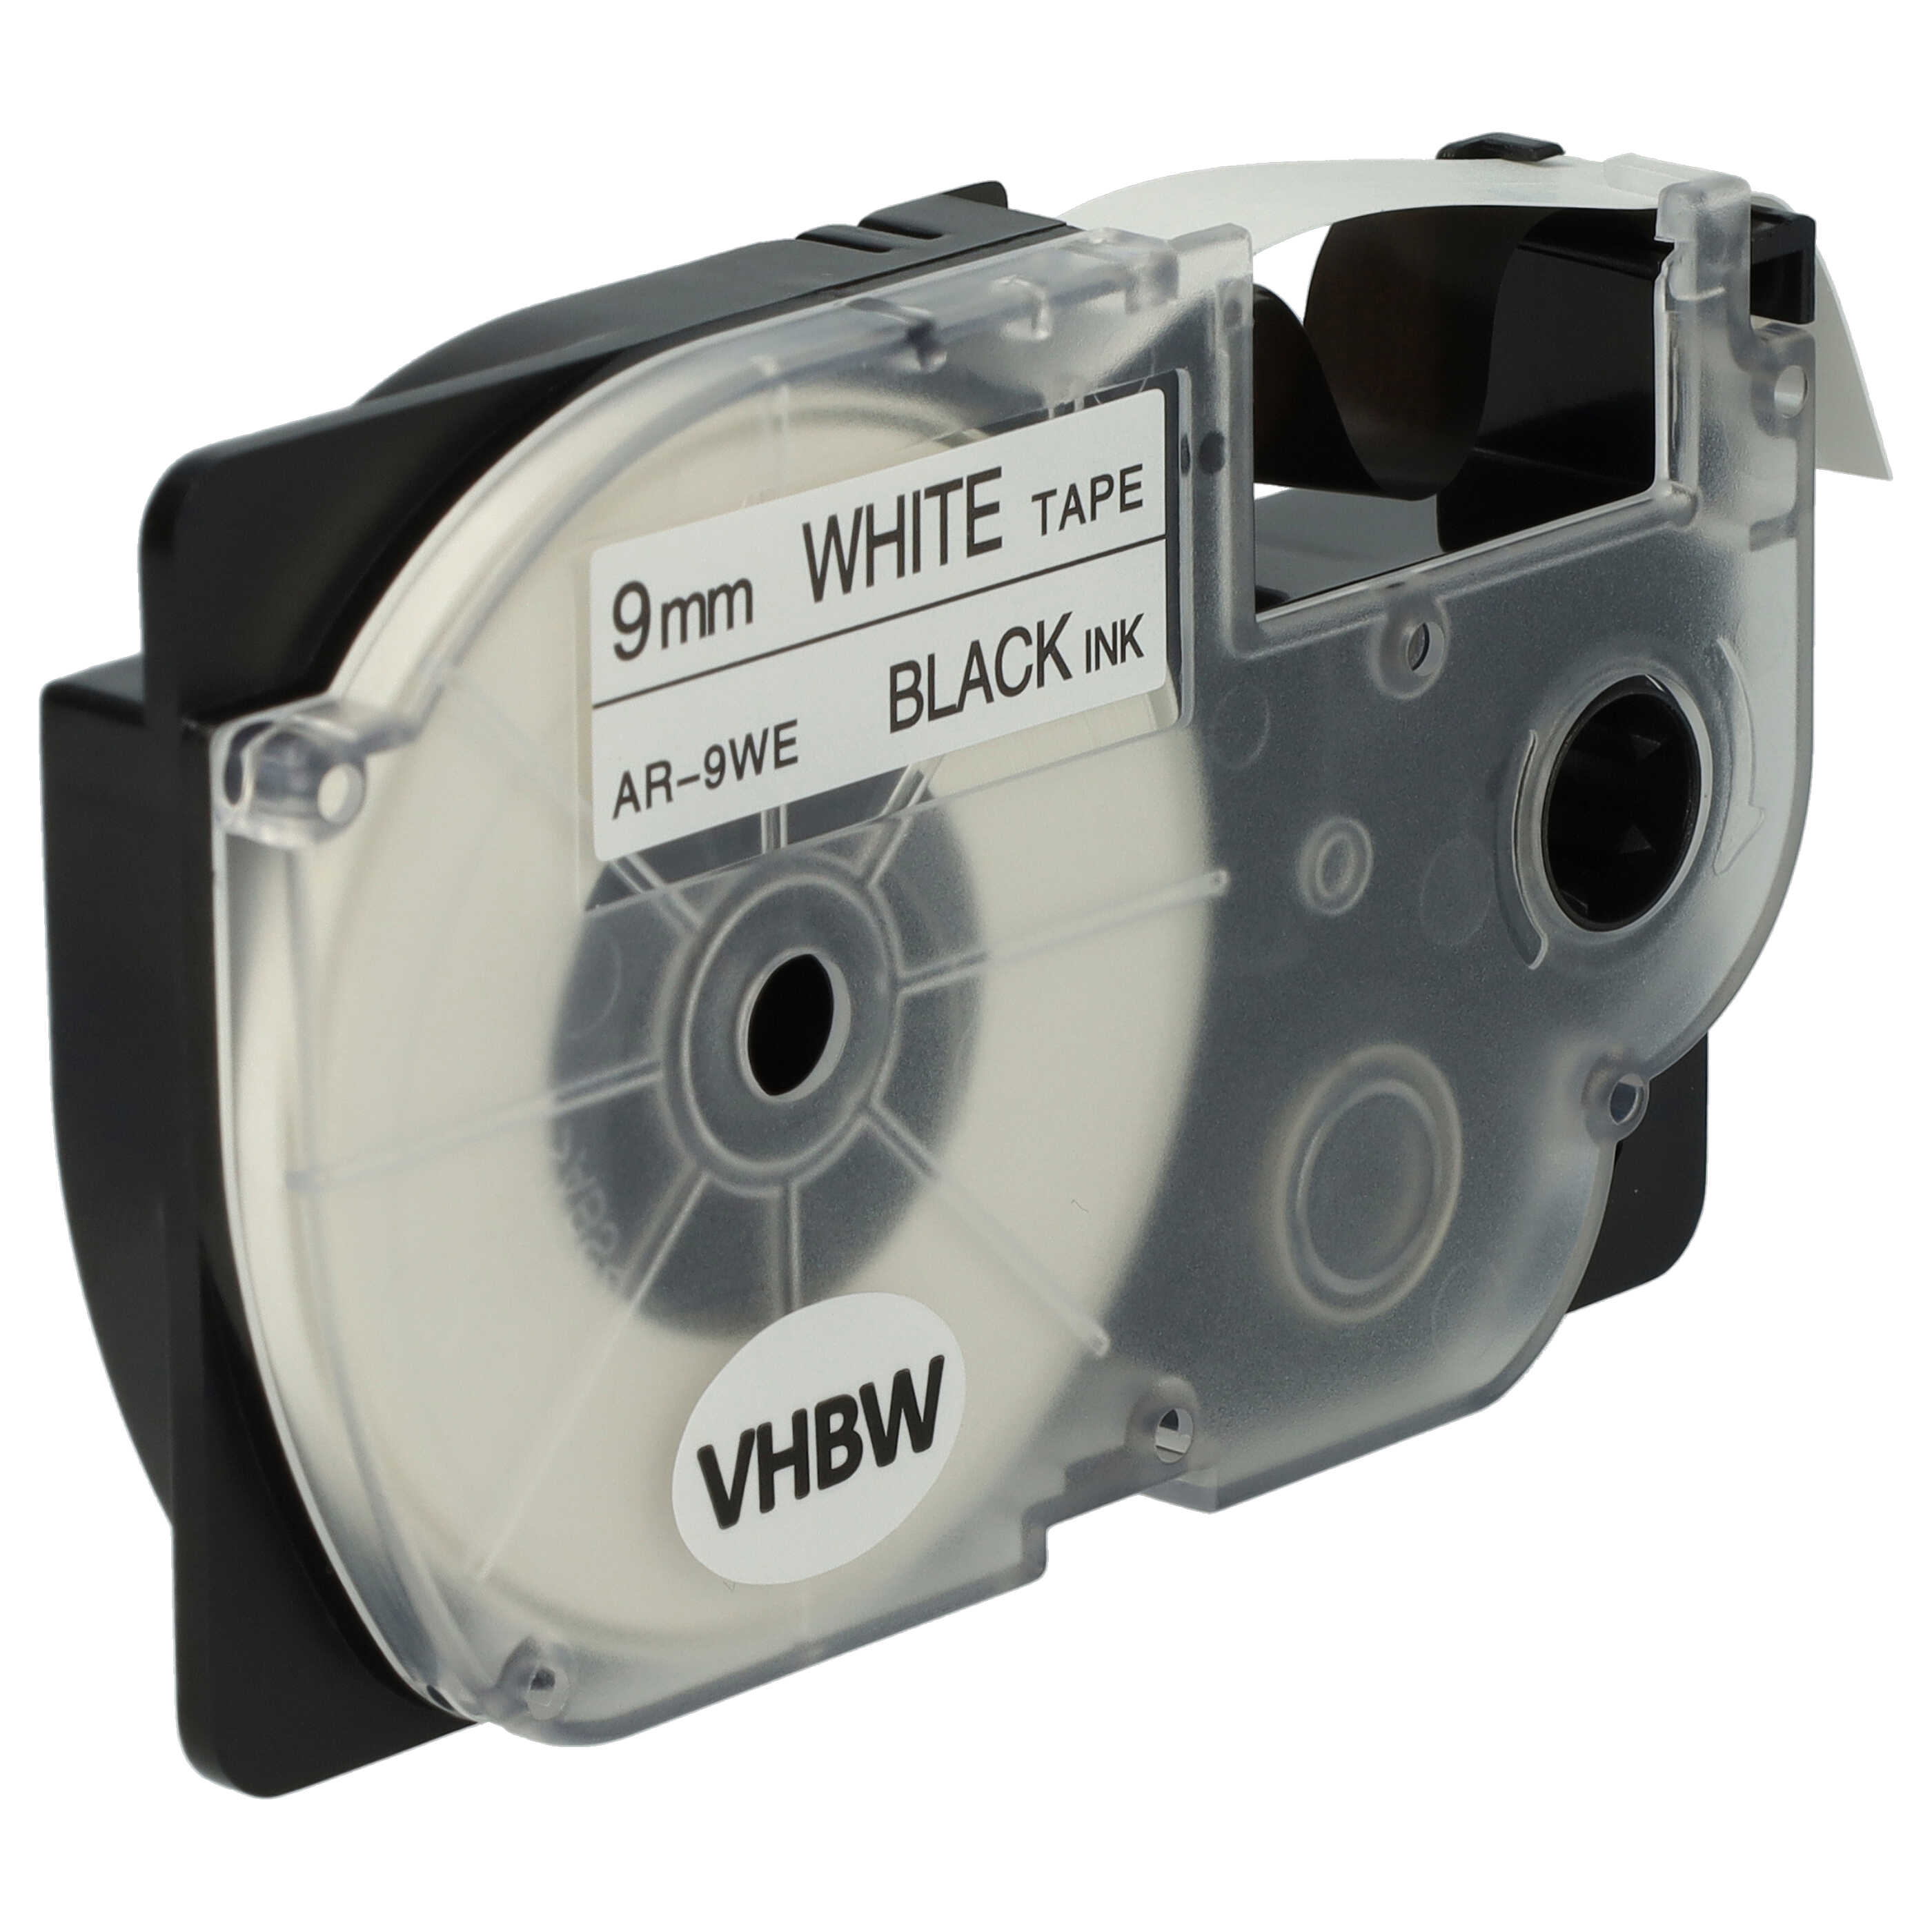 10x Cassetta nastro sostituisce Casio XR-9WE1 per etichettatrice Casio 9mm nero su bianco